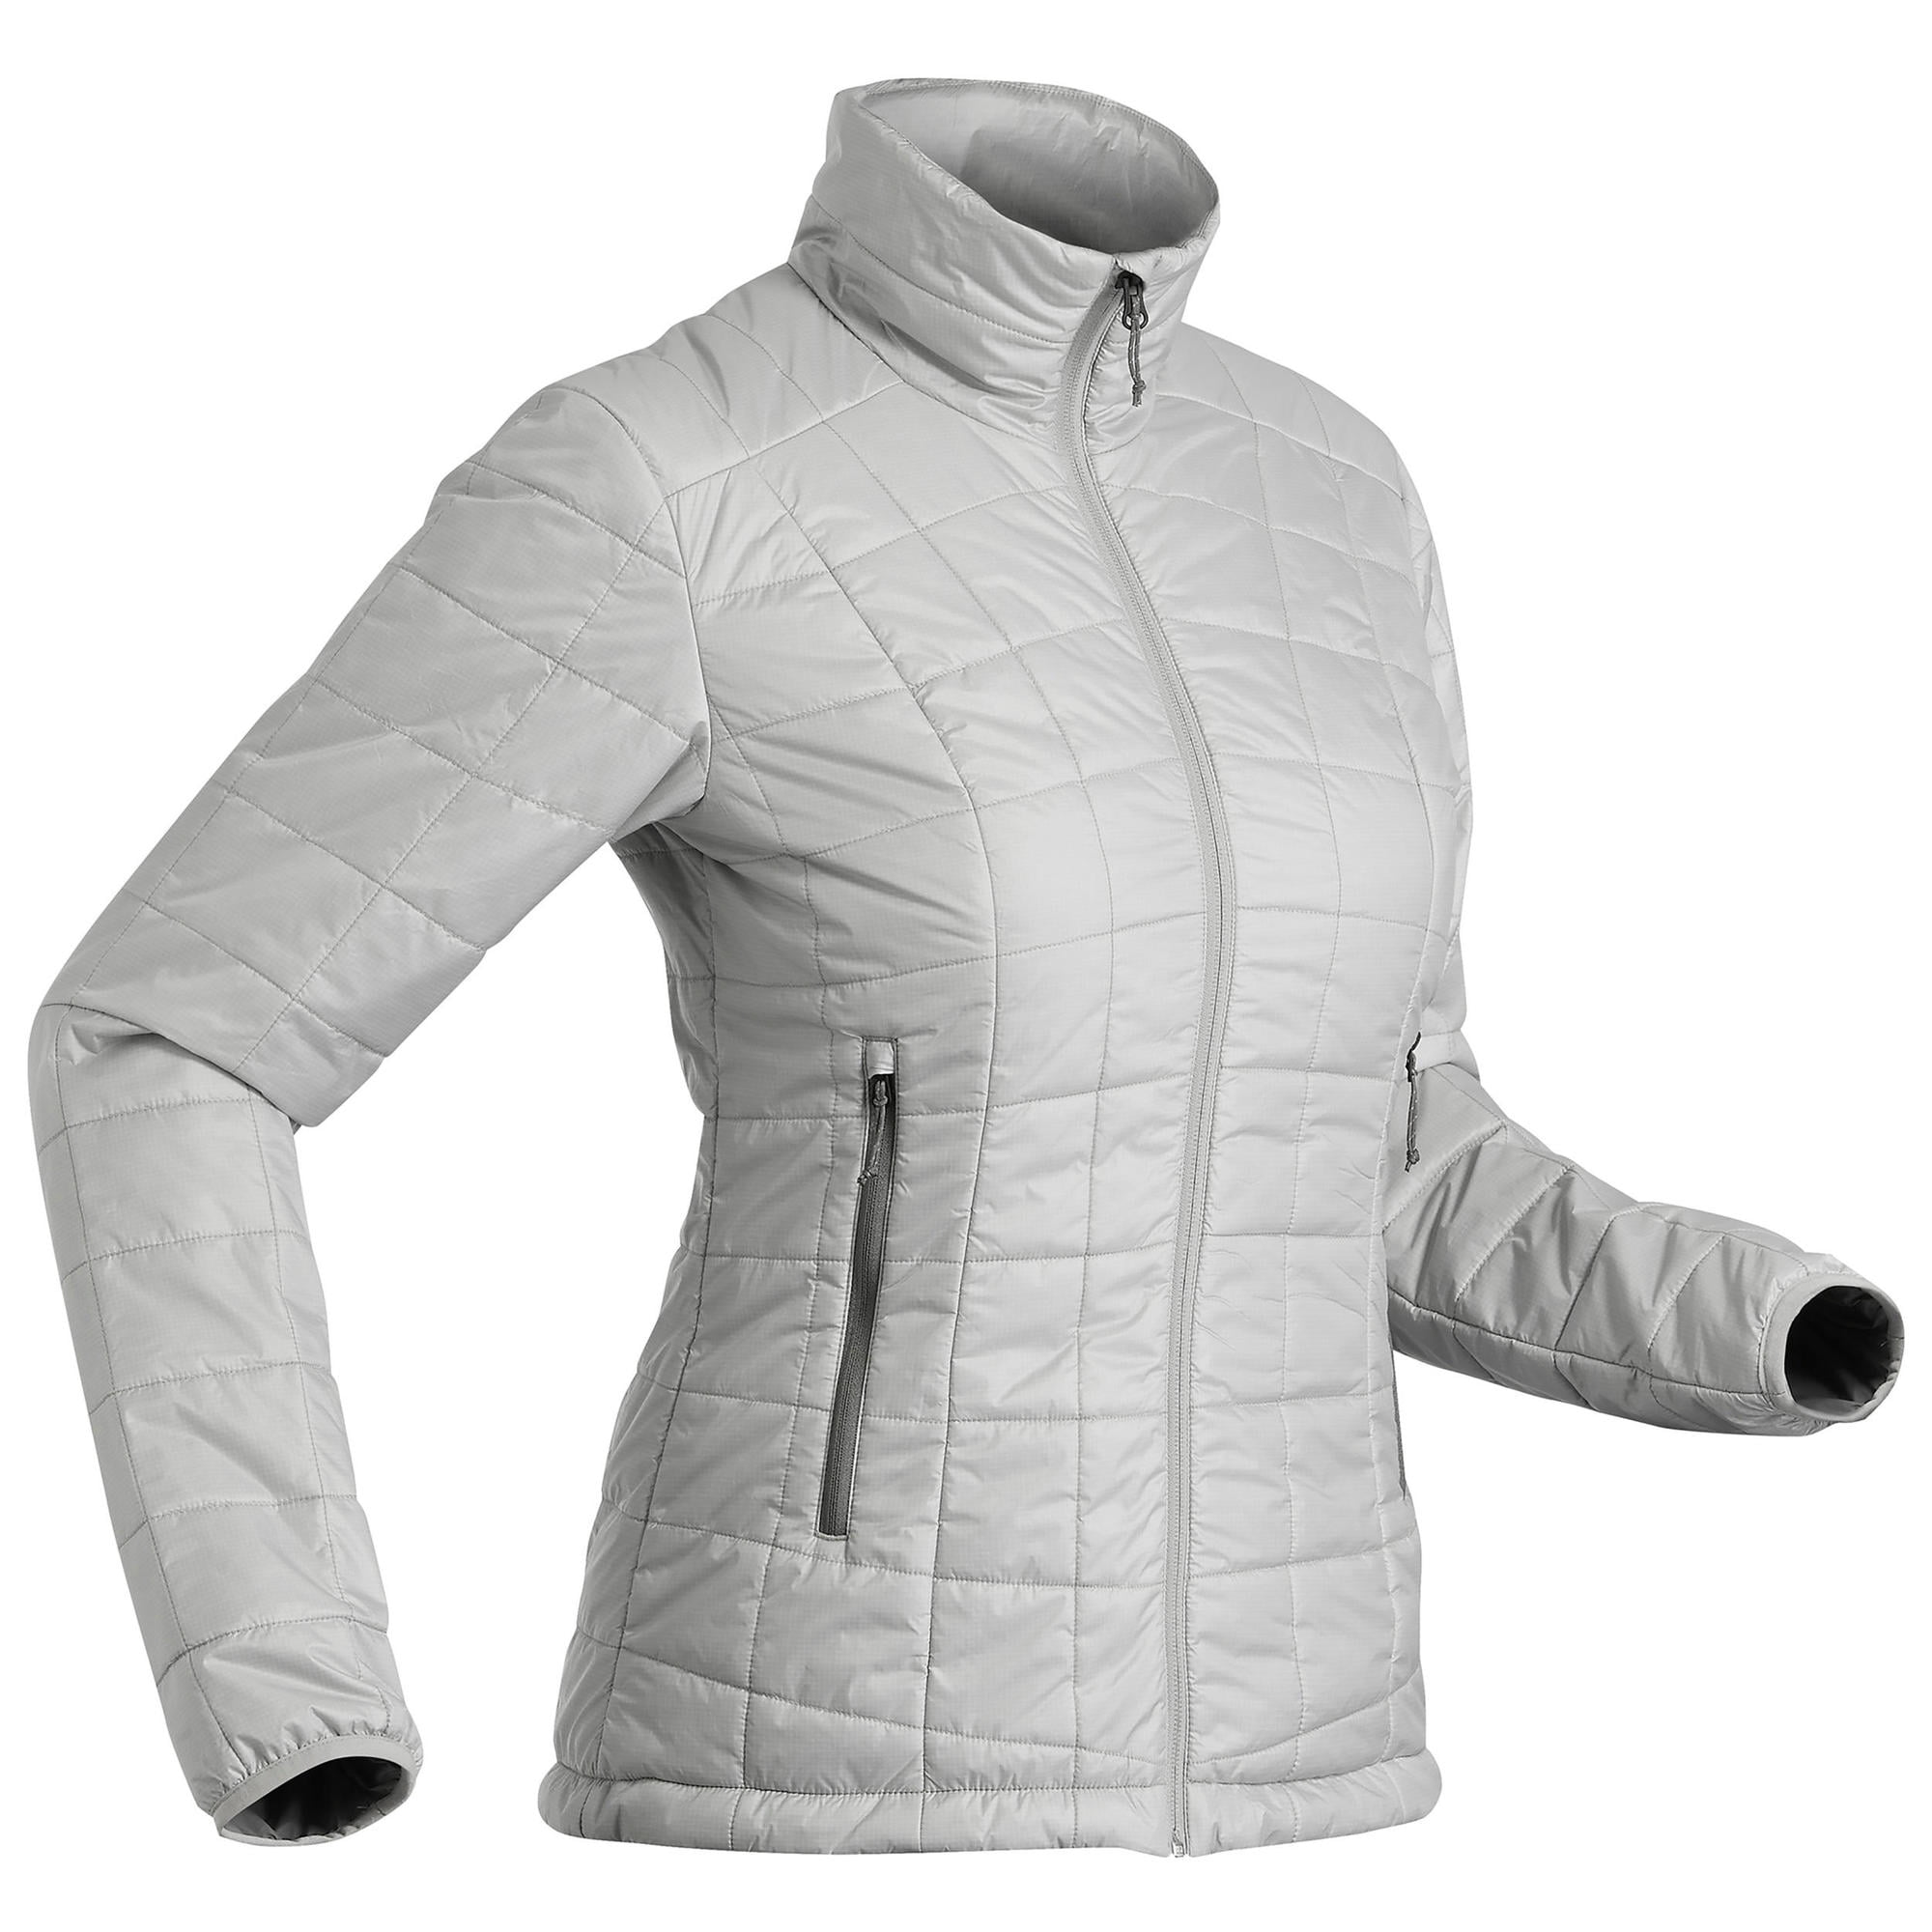 padded jacket decathlon